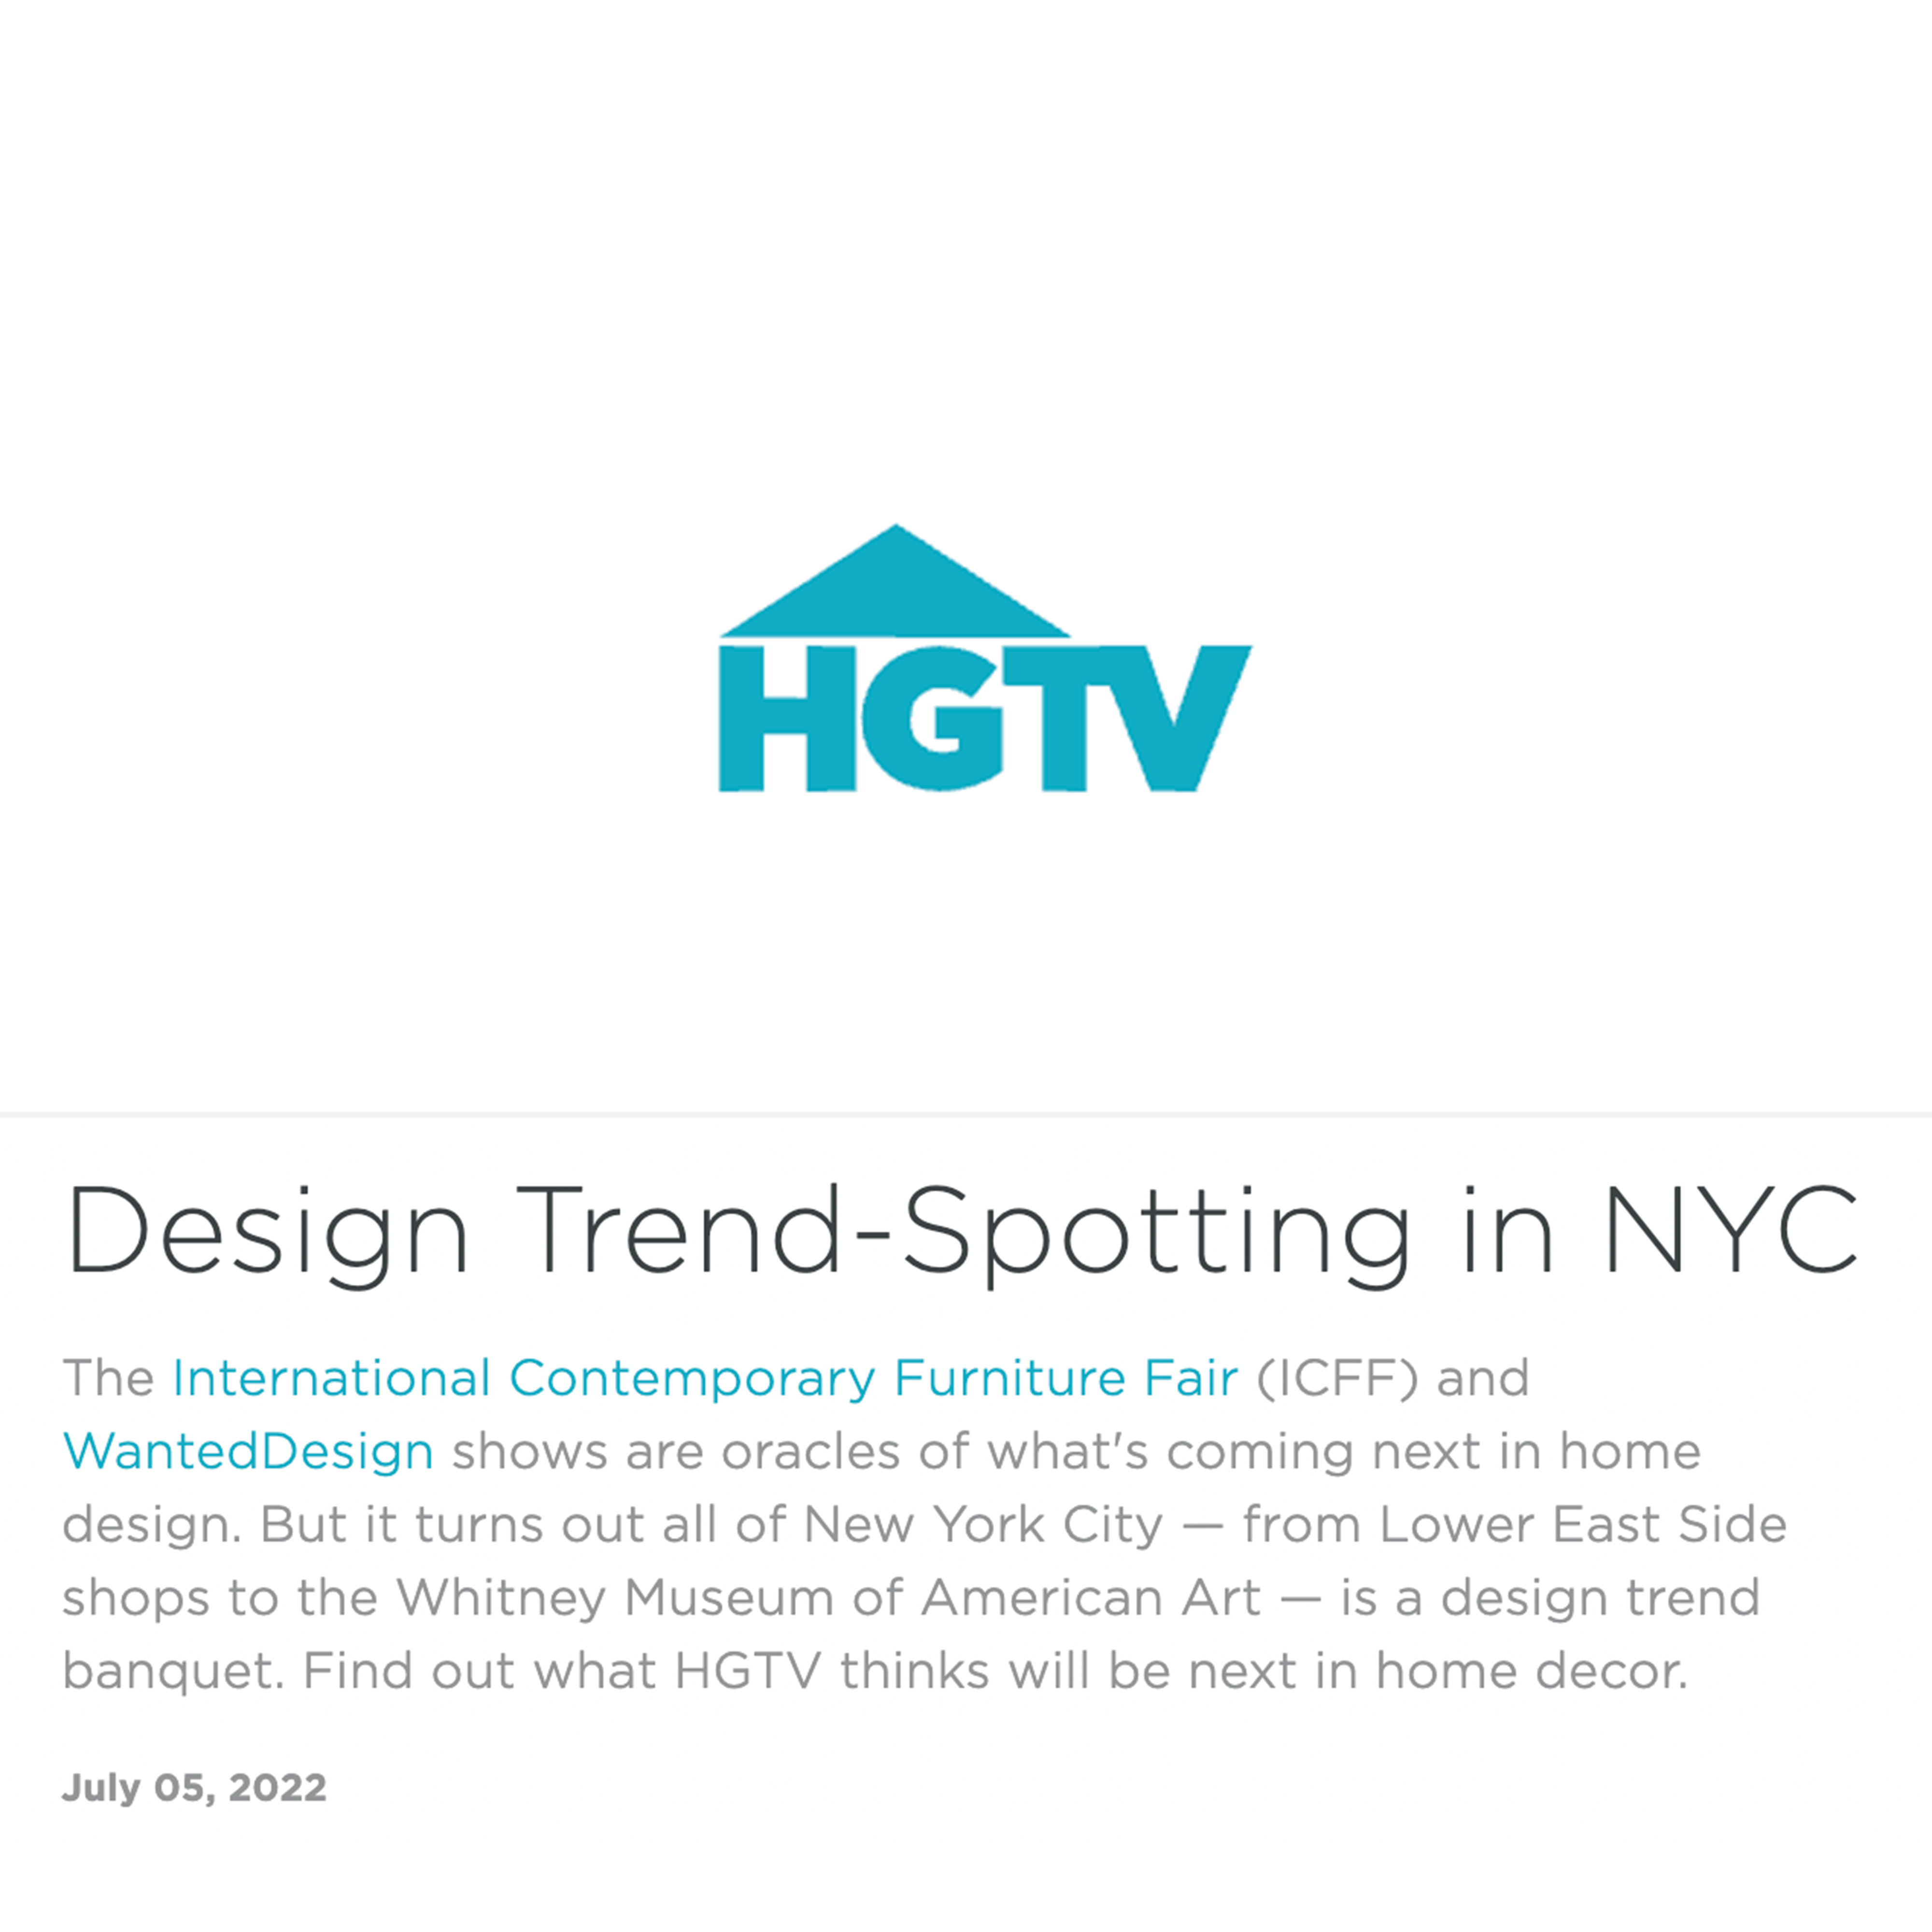 HGTV - Design Trend-Spotting in NYC